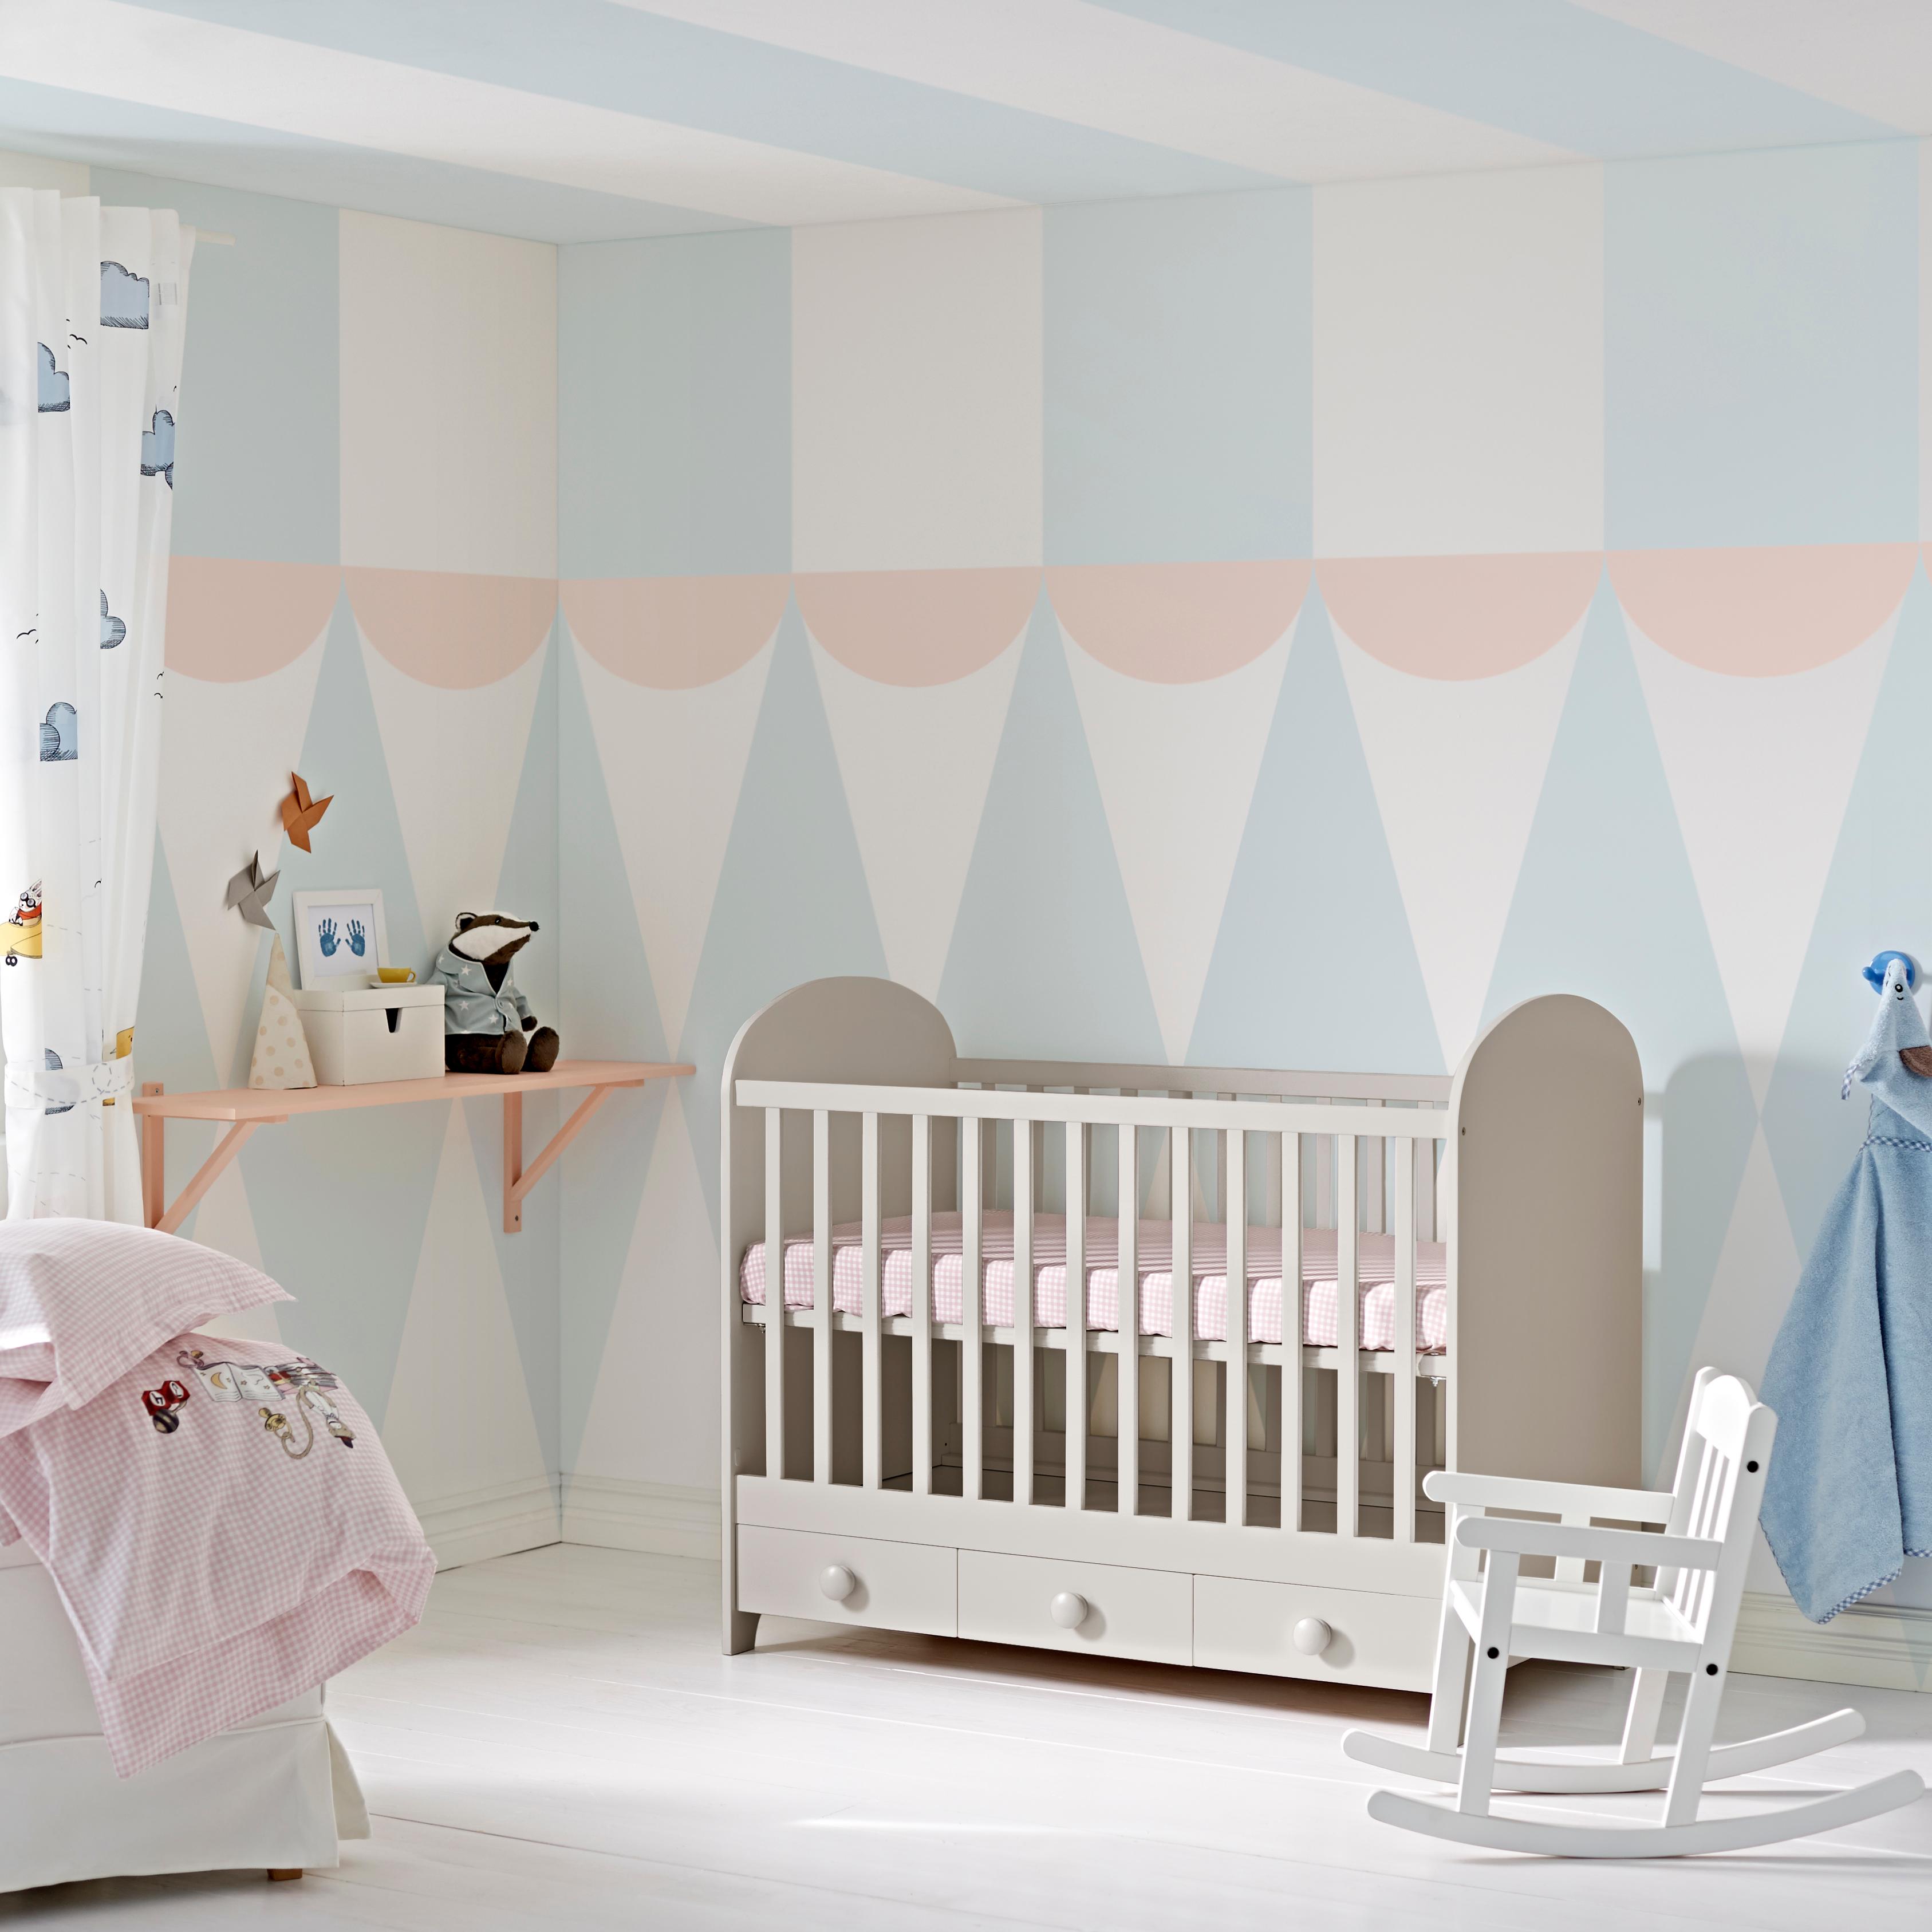 Wandgestaltung im Babyzimmer #wandregal #wandgestaltung #pastellfarbe #ikea #schaukelstuhl #babybett #mustertapete #babyzimmer #designwand ©Inter IKEA Systems B.V.